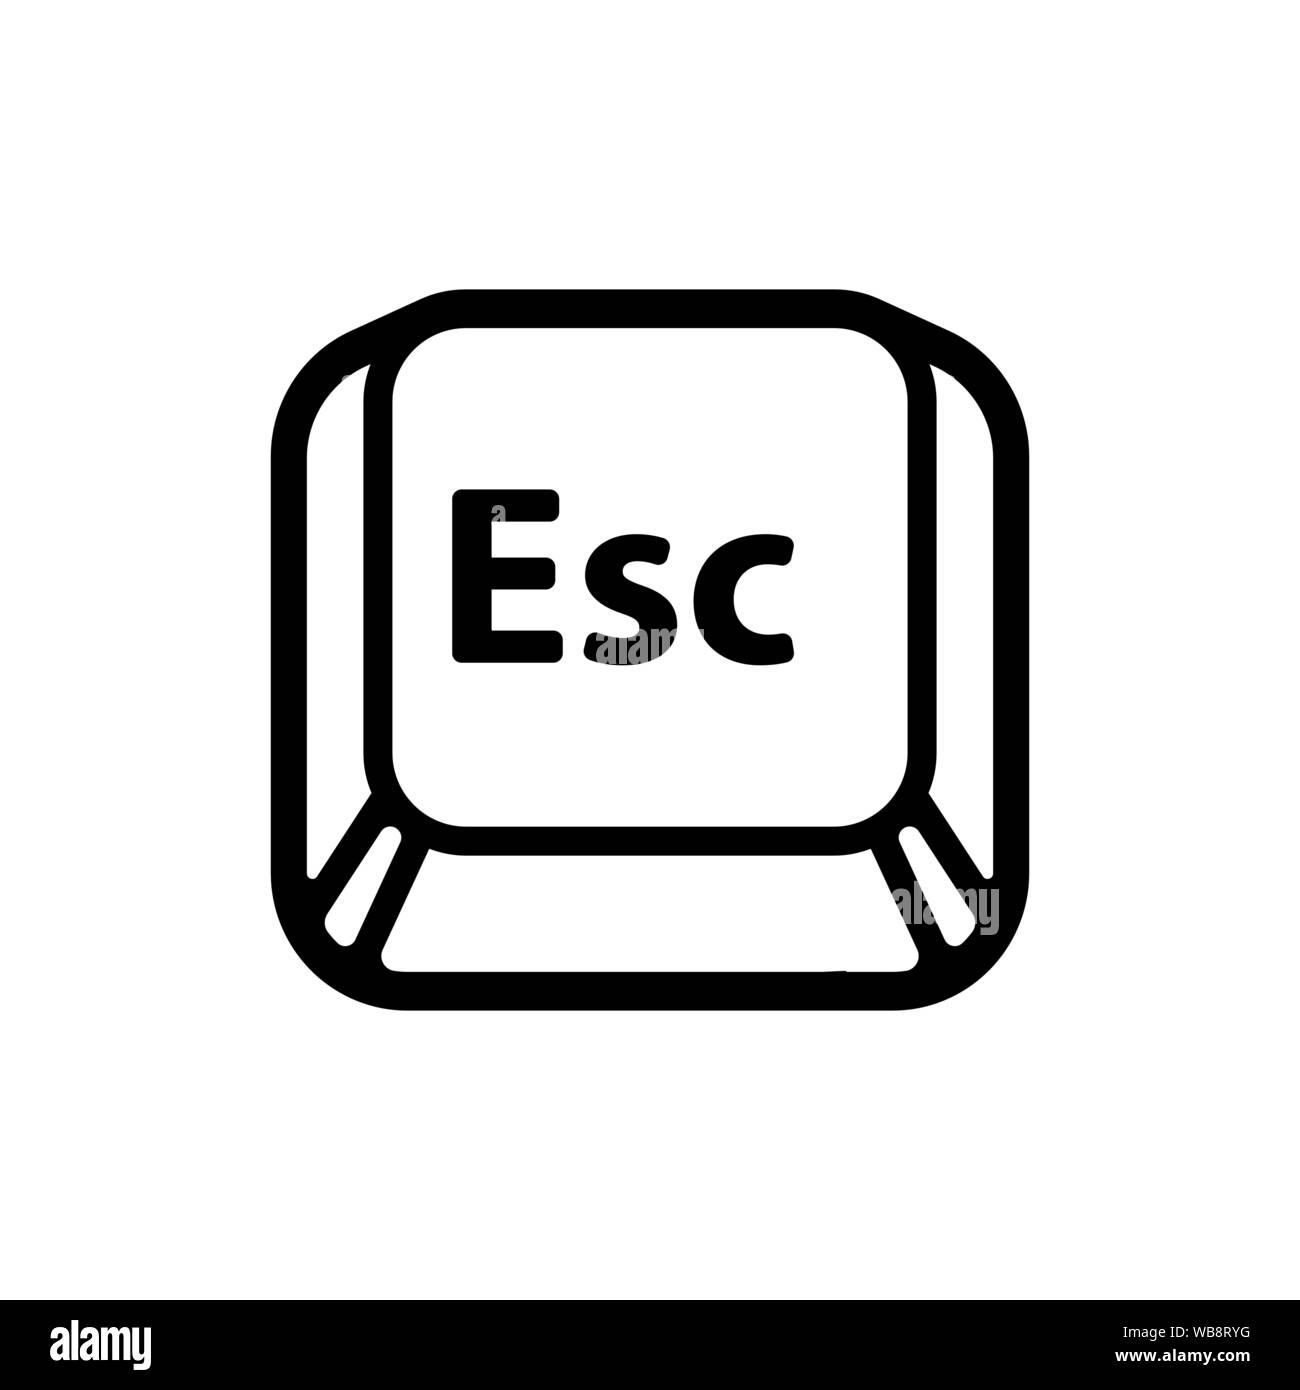 ESC - MariannCelsea